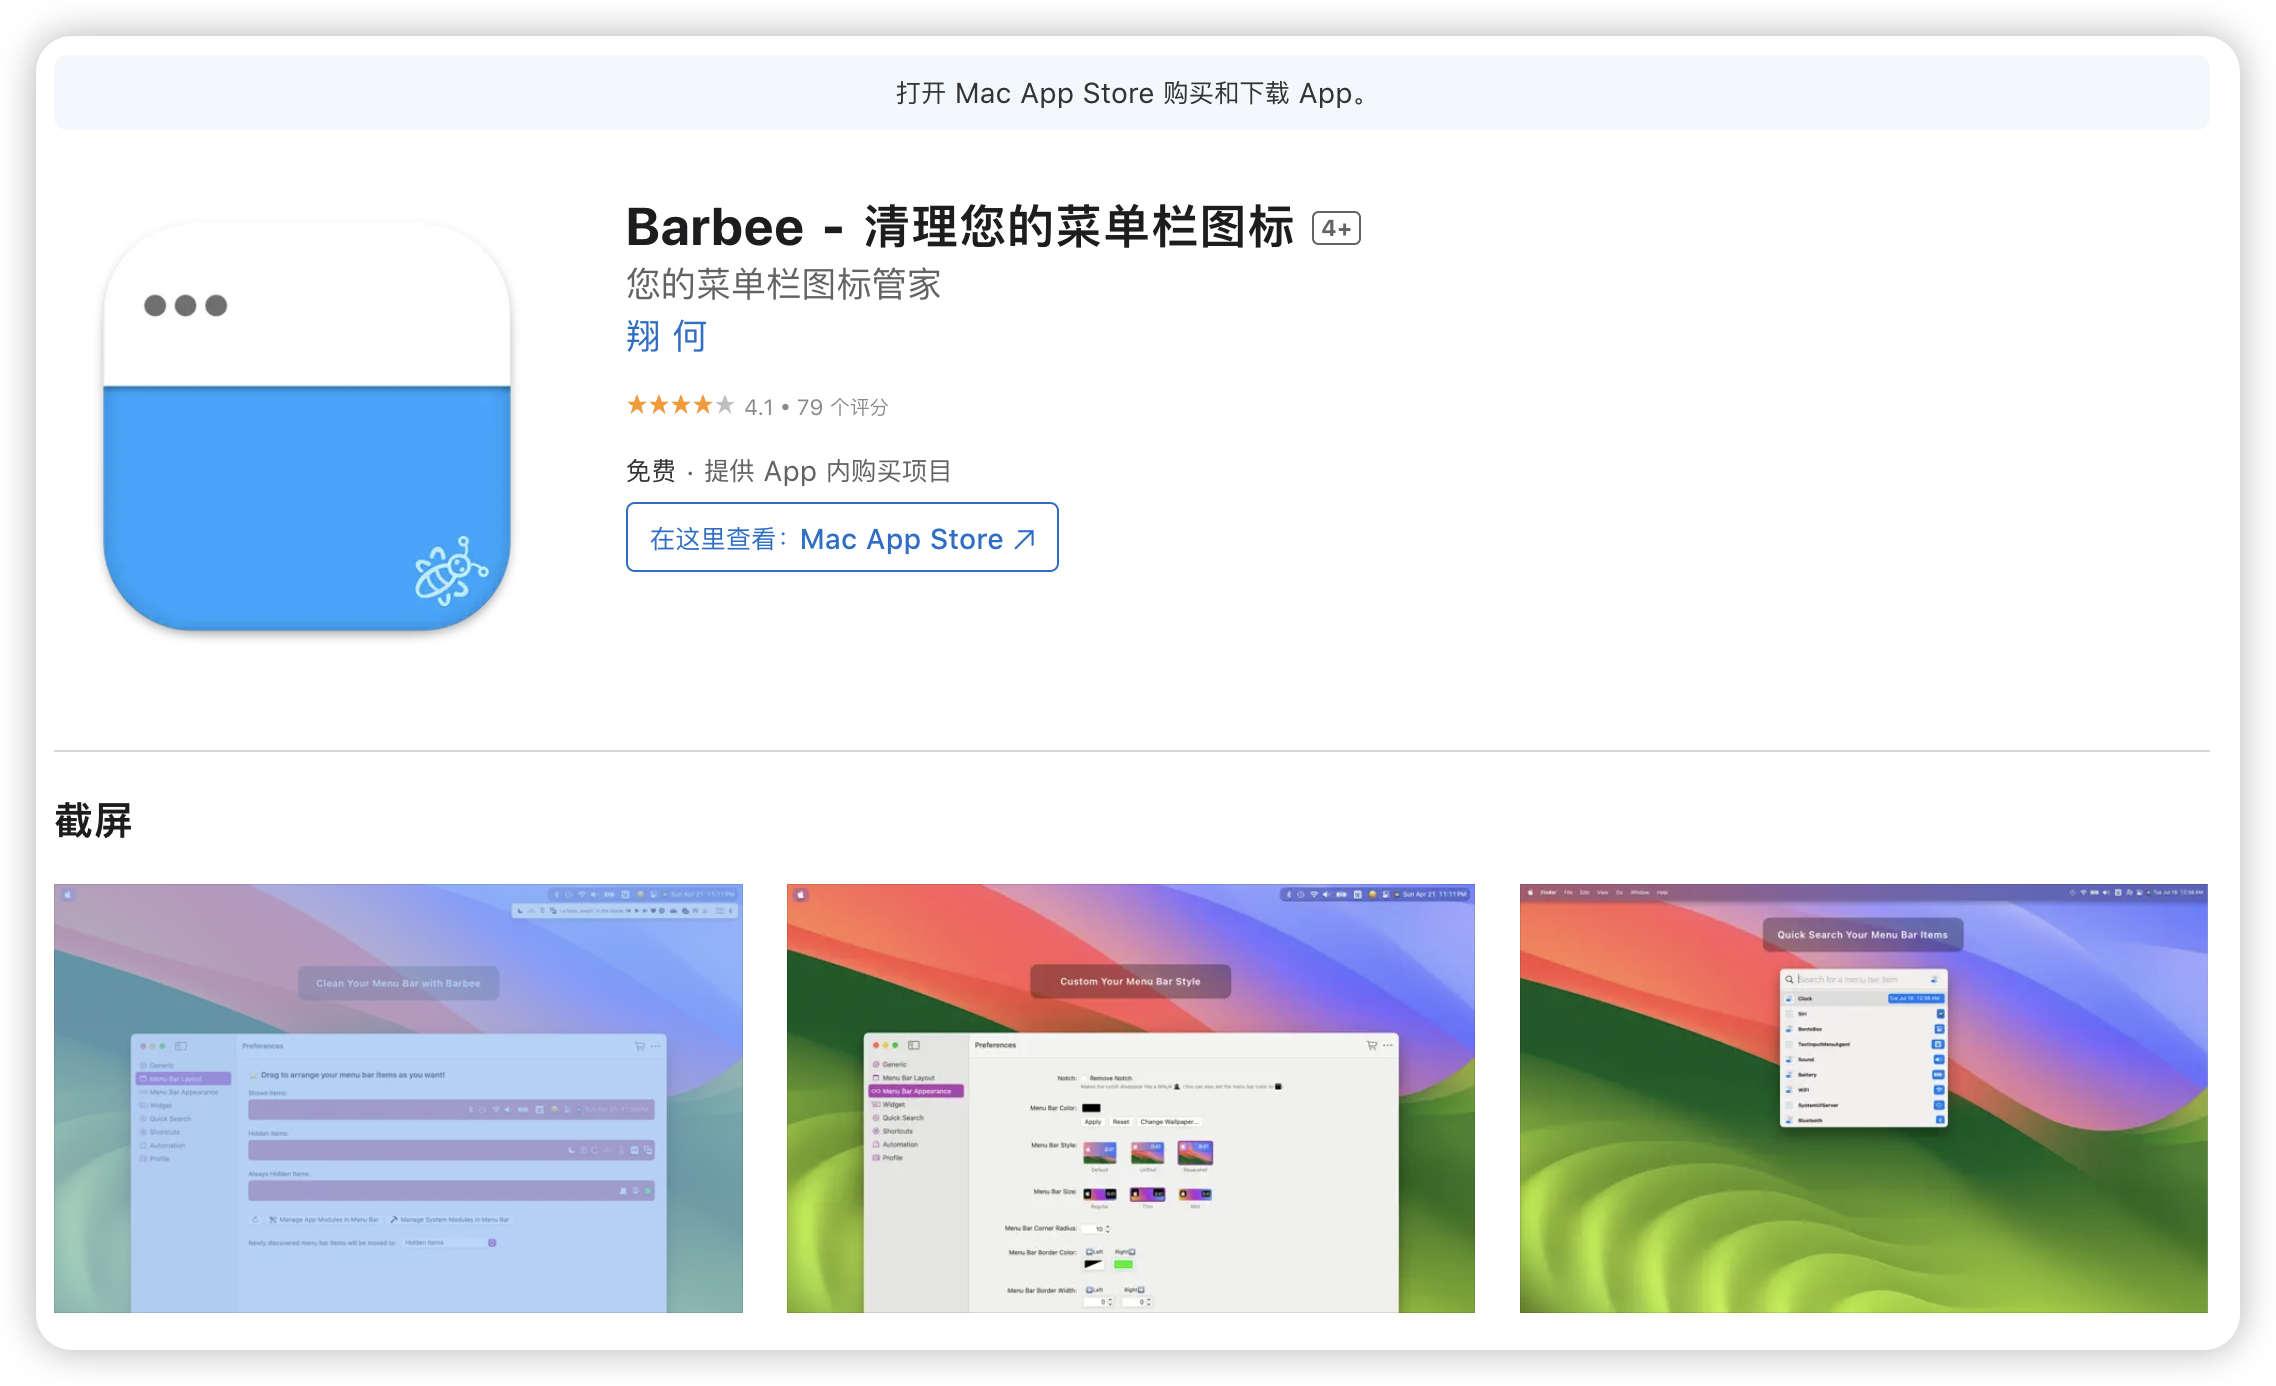 Barbee-清理隐藏你的菜单栏图标软件 macOS终身版限免